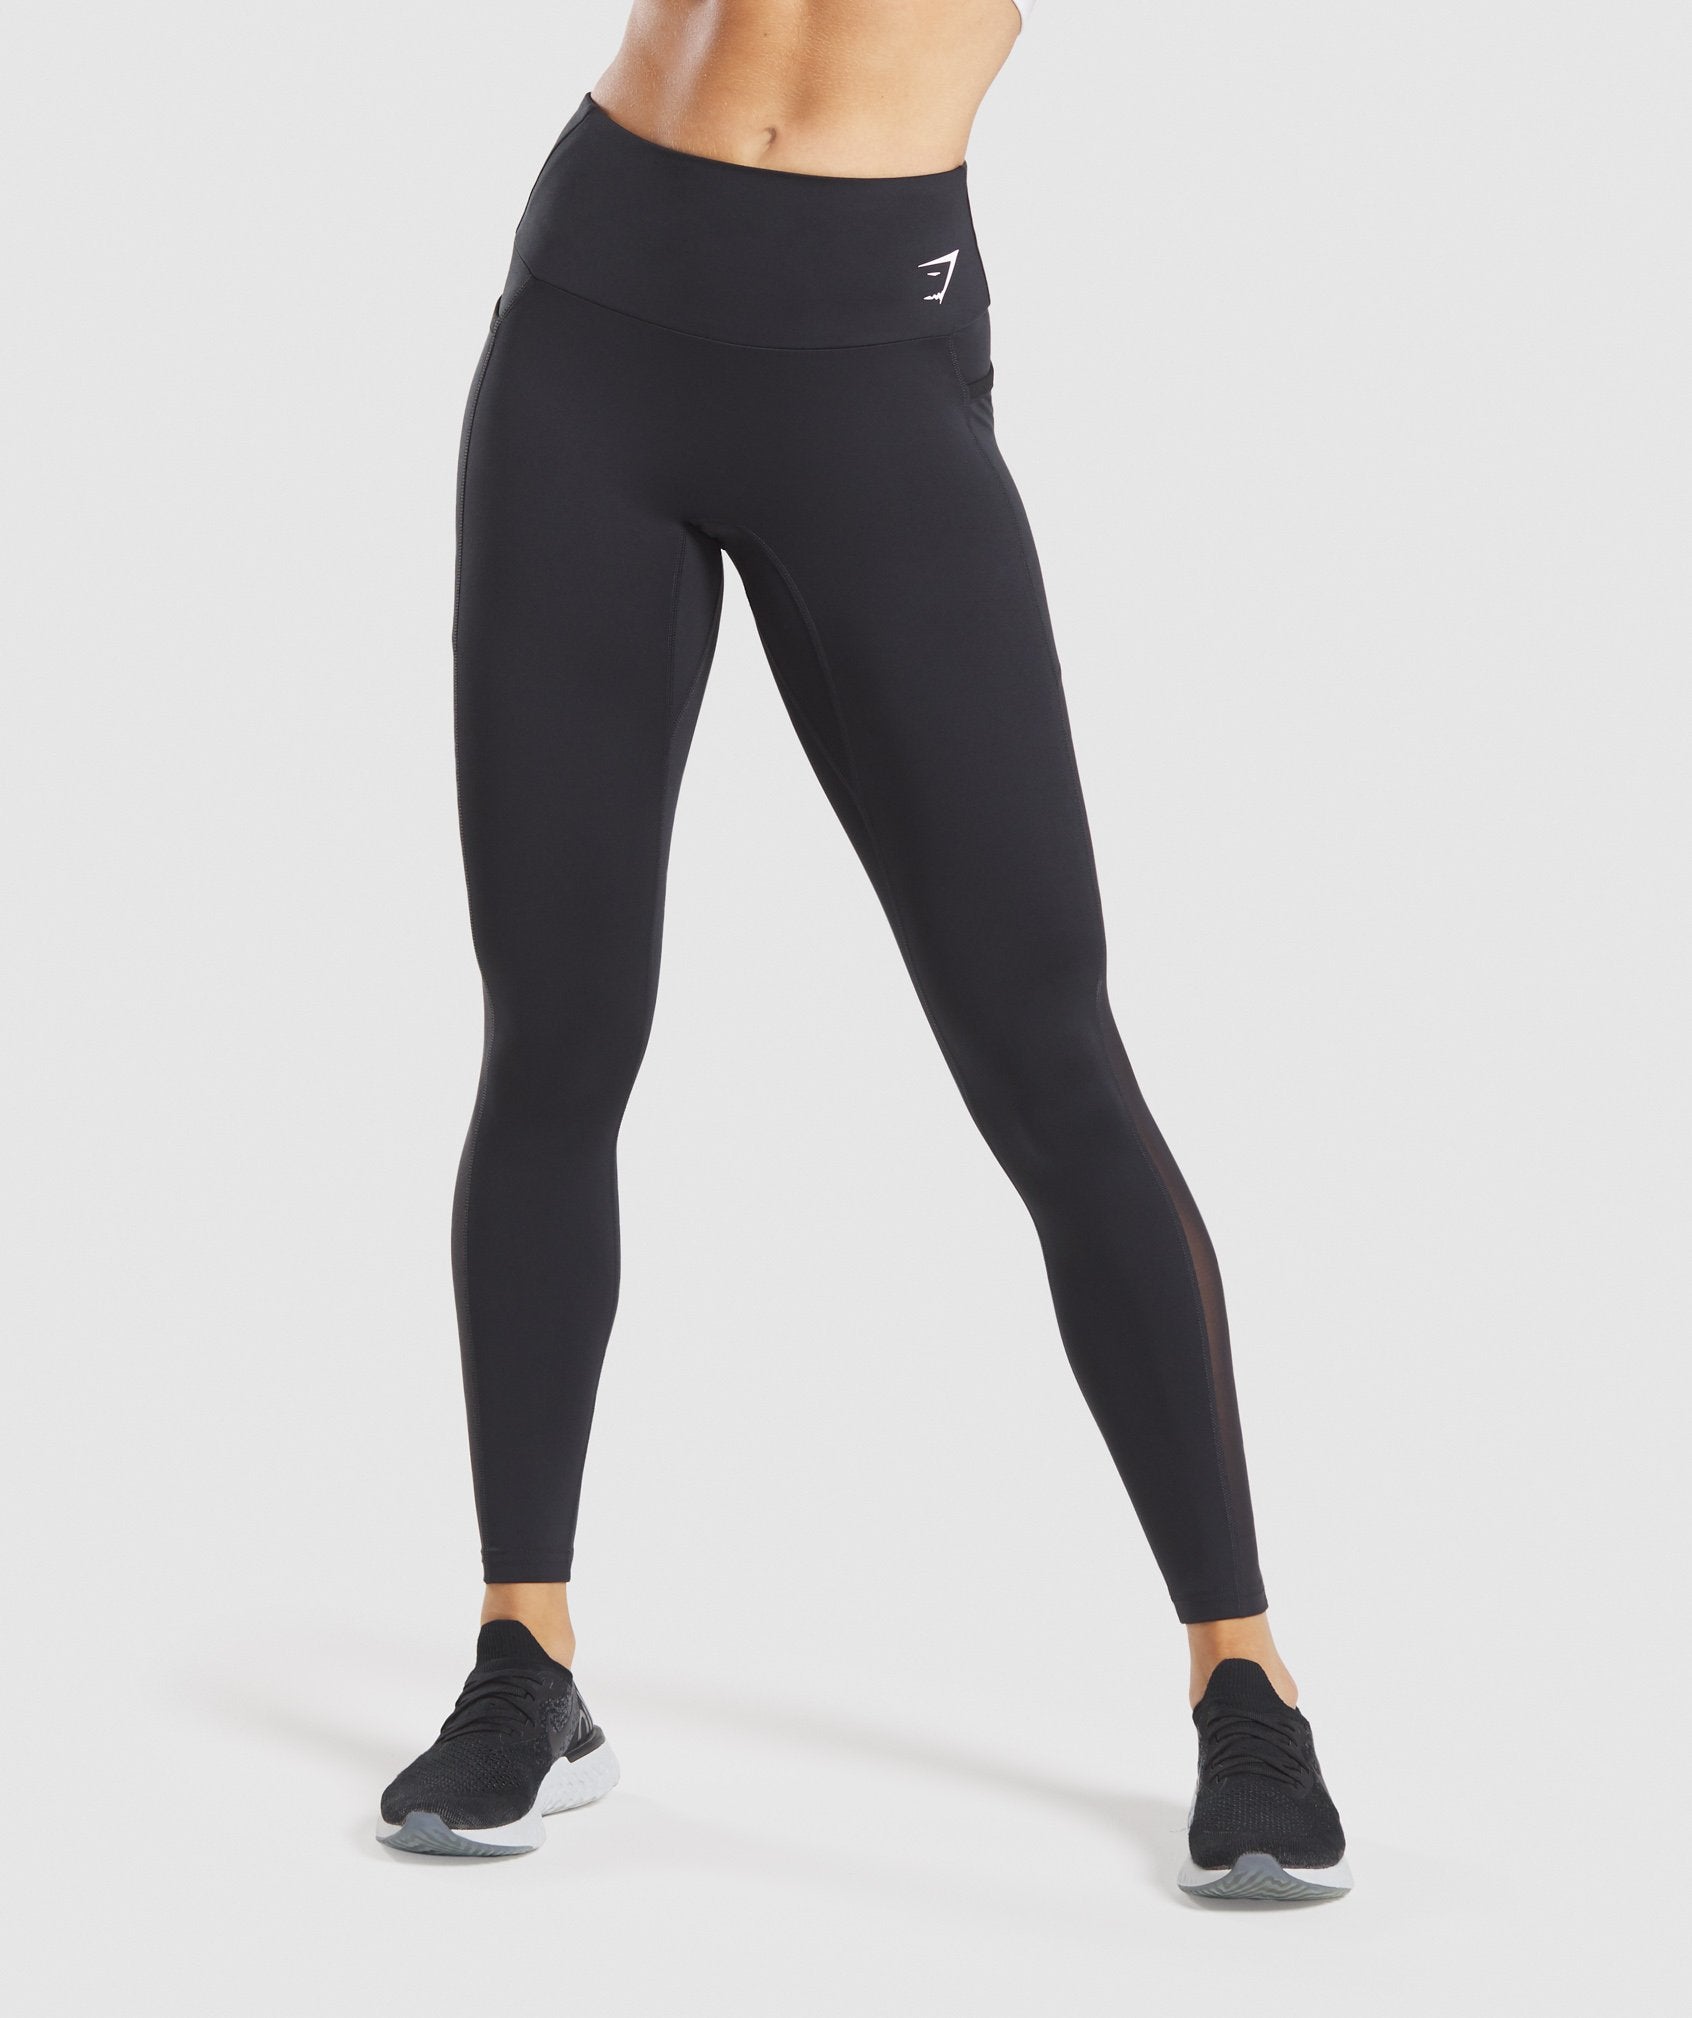 Gymshark Asymmetric Leggings Medium Womens Smokey Gray Black Pockets